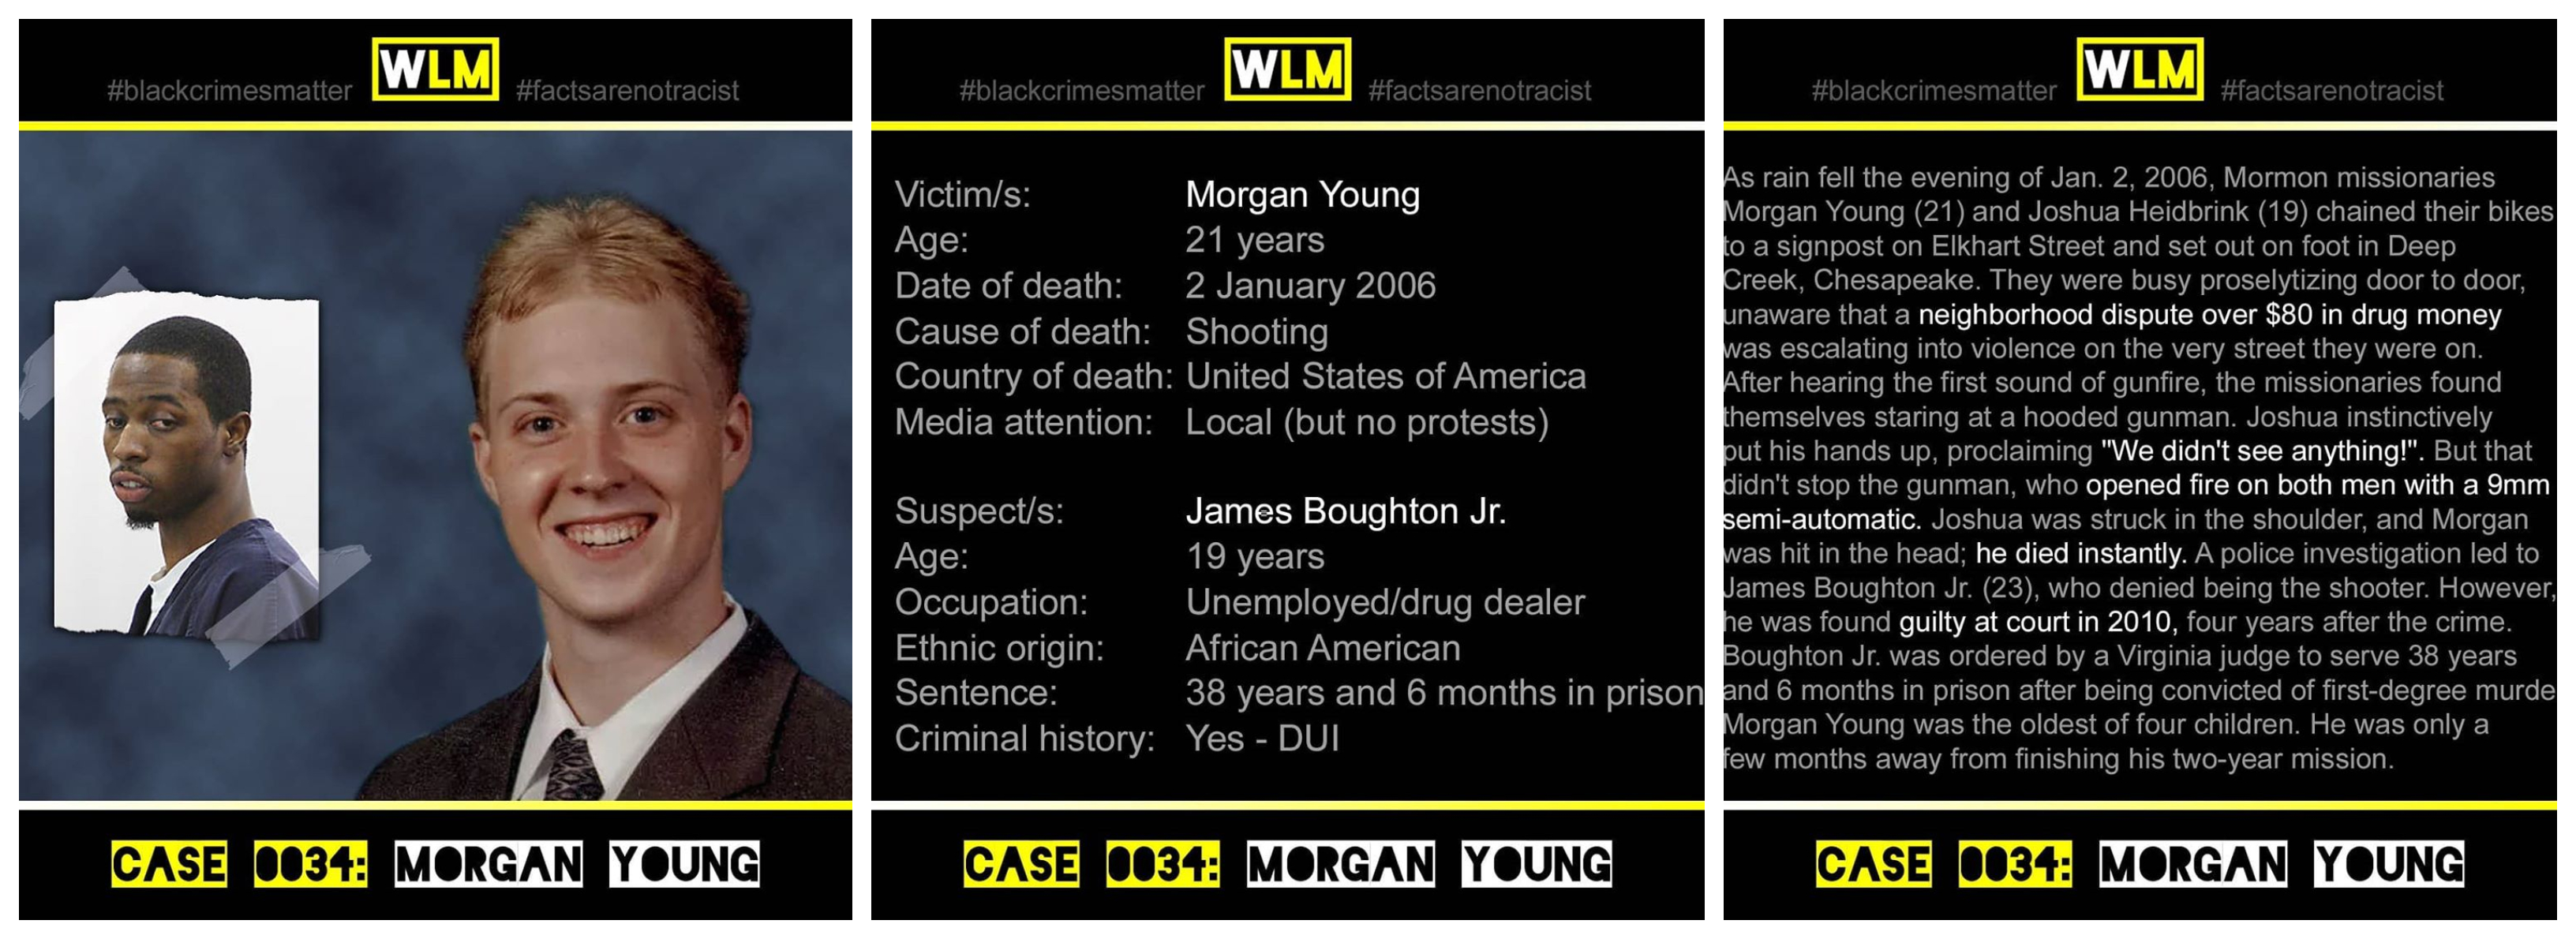 case-034-morgan-young